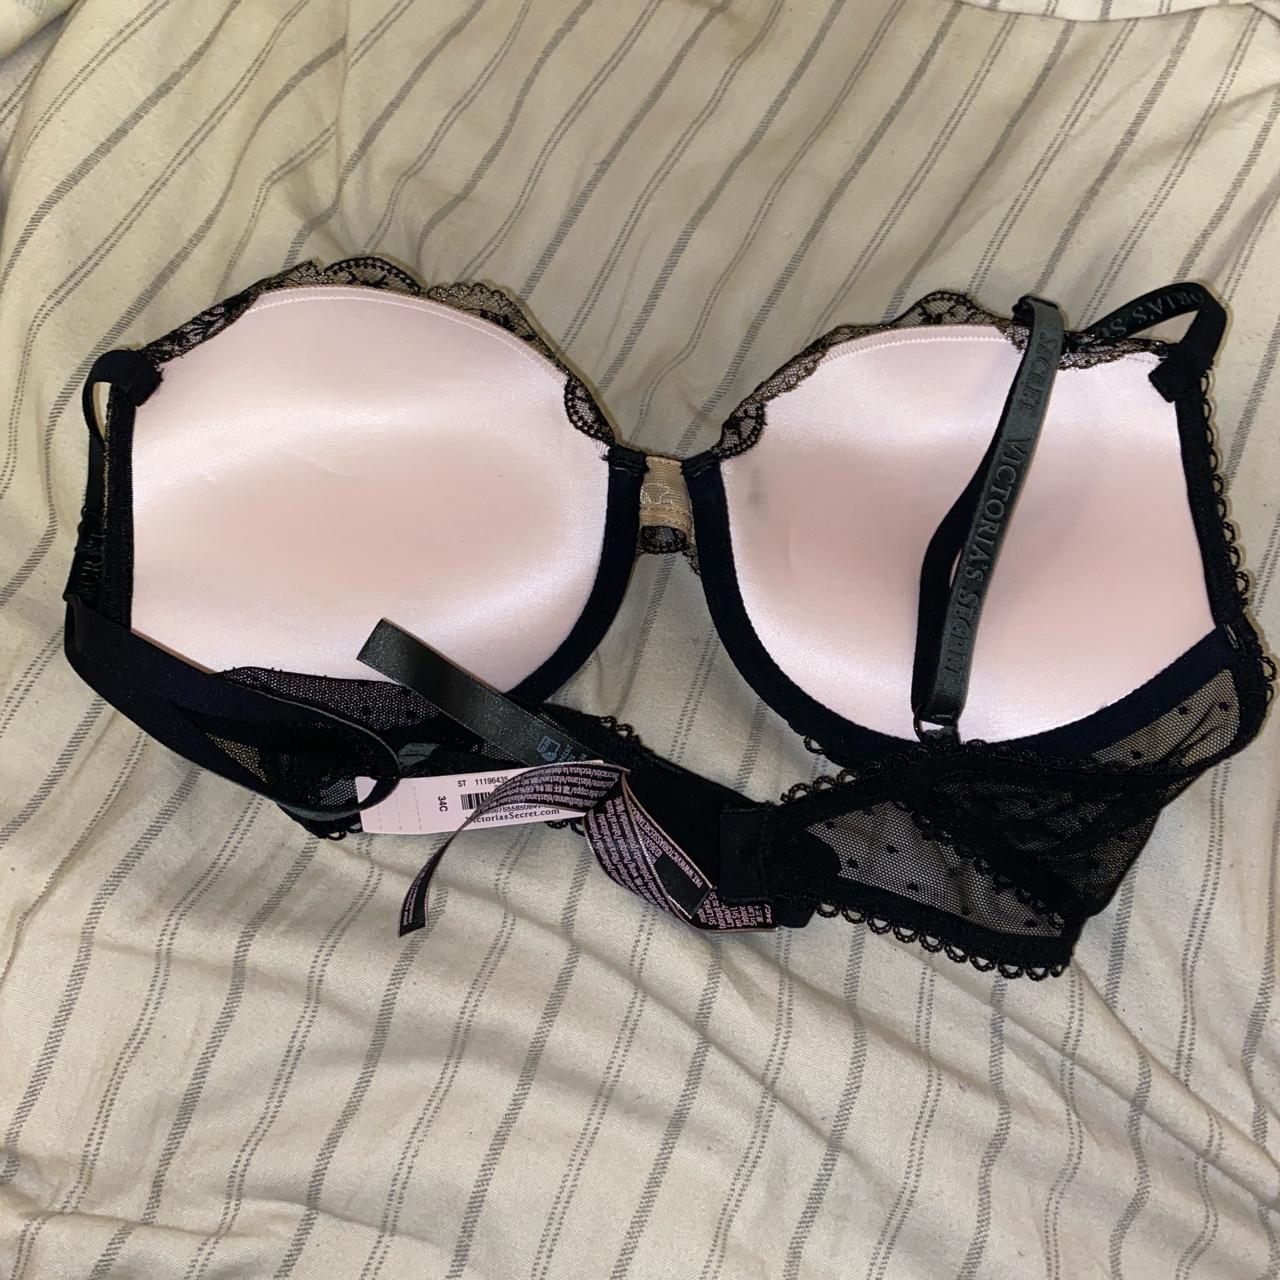 Victoria's Secret push up bra size 32D brand new - Depop